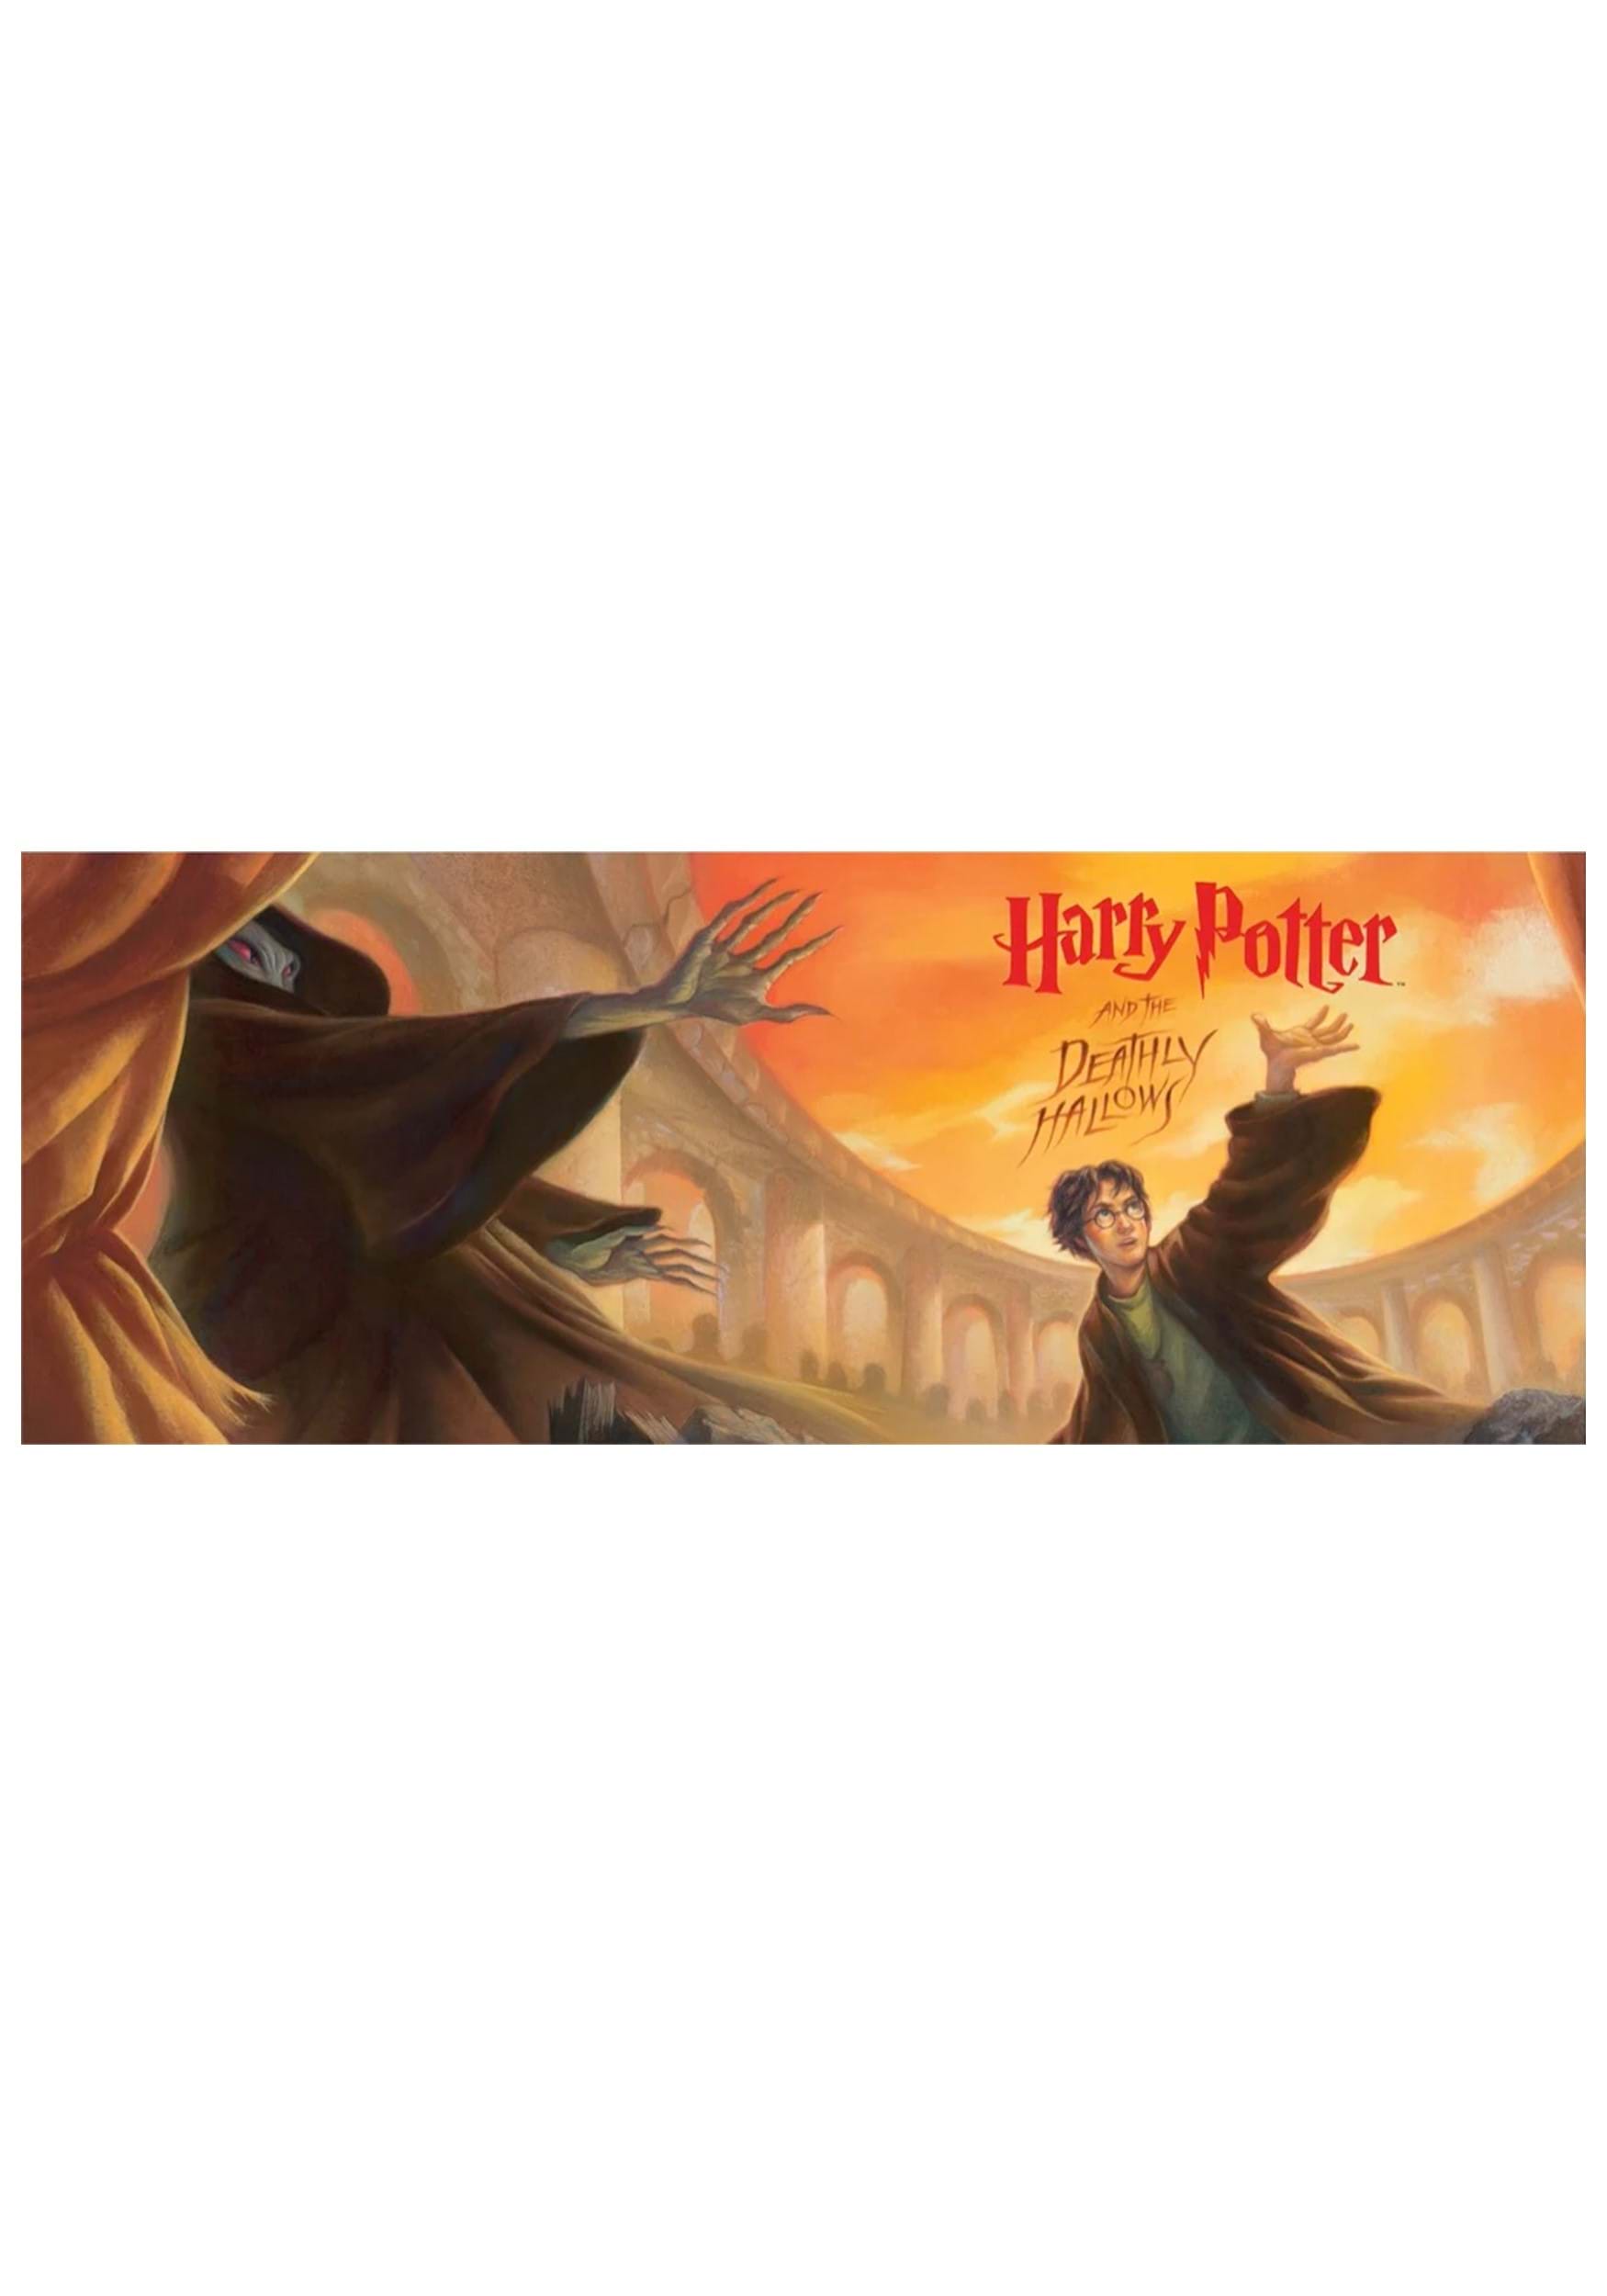 Deathly Hallows Mug Harry Potter